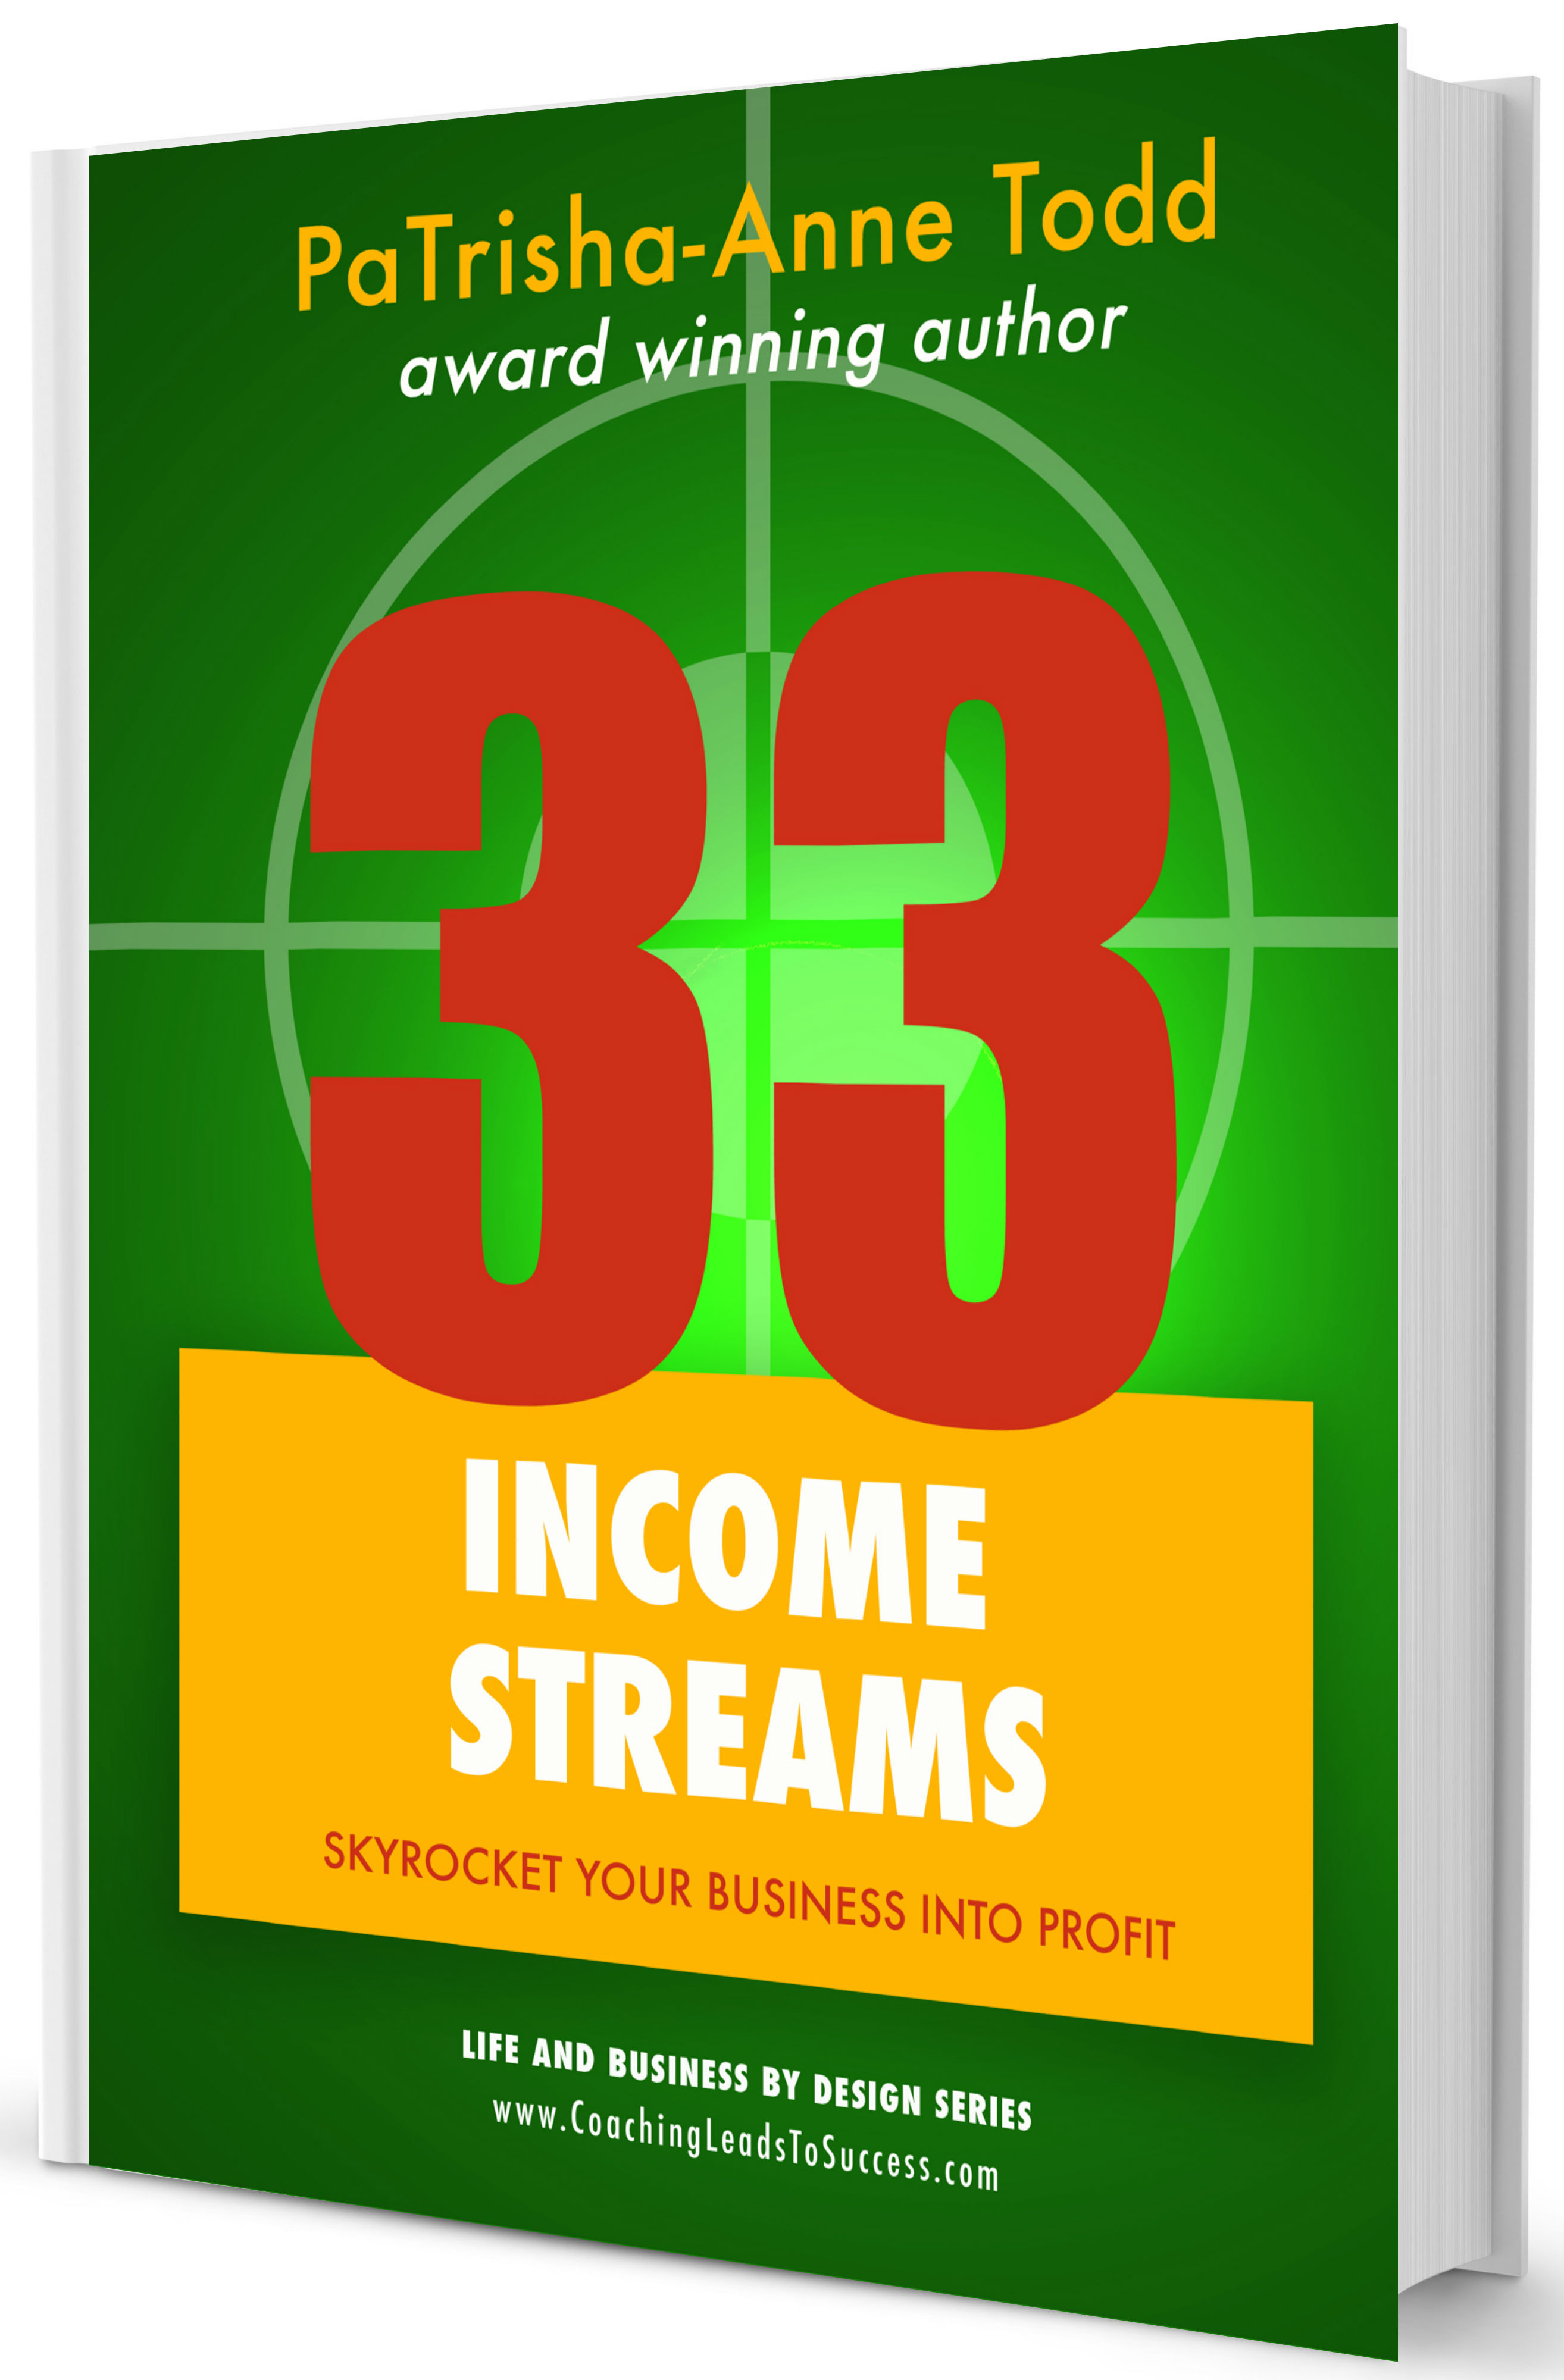 33 Income Streams by PaTrihsa-Anne Todd at www.CoachingLeadsToSuccess.com